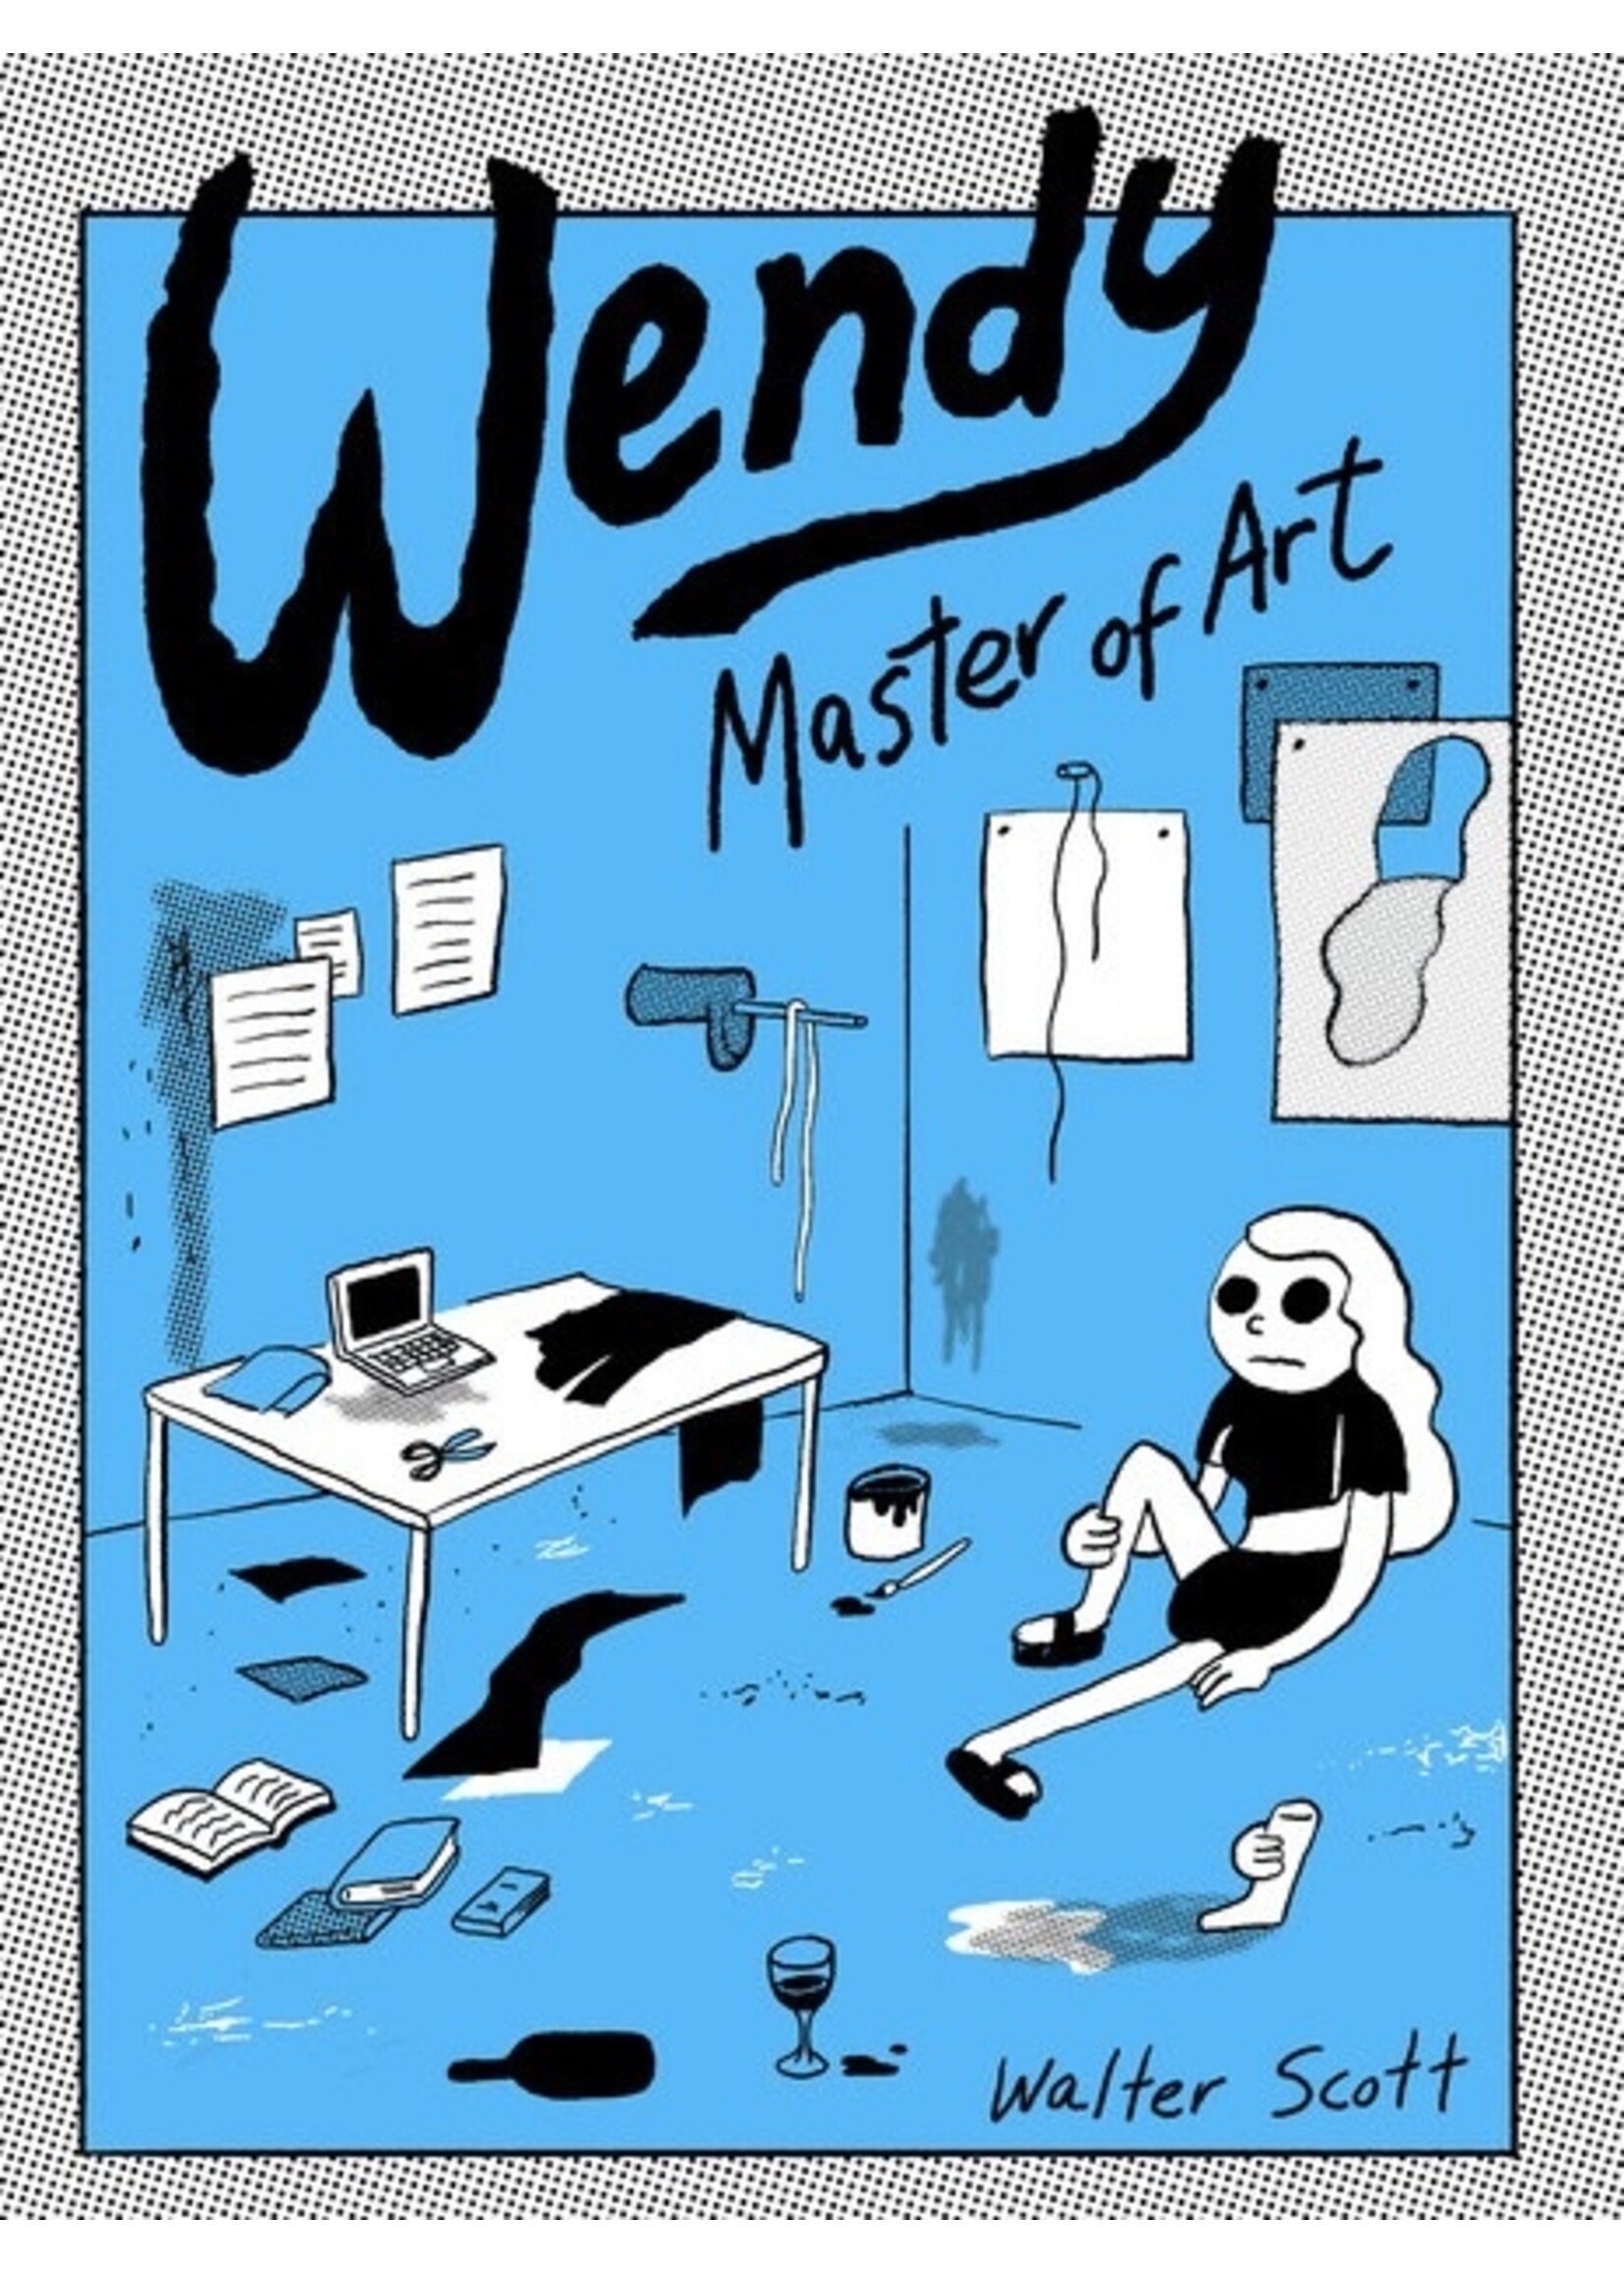 Drawn & Quarterly "Wendy, Master of Art" by Walter Scott